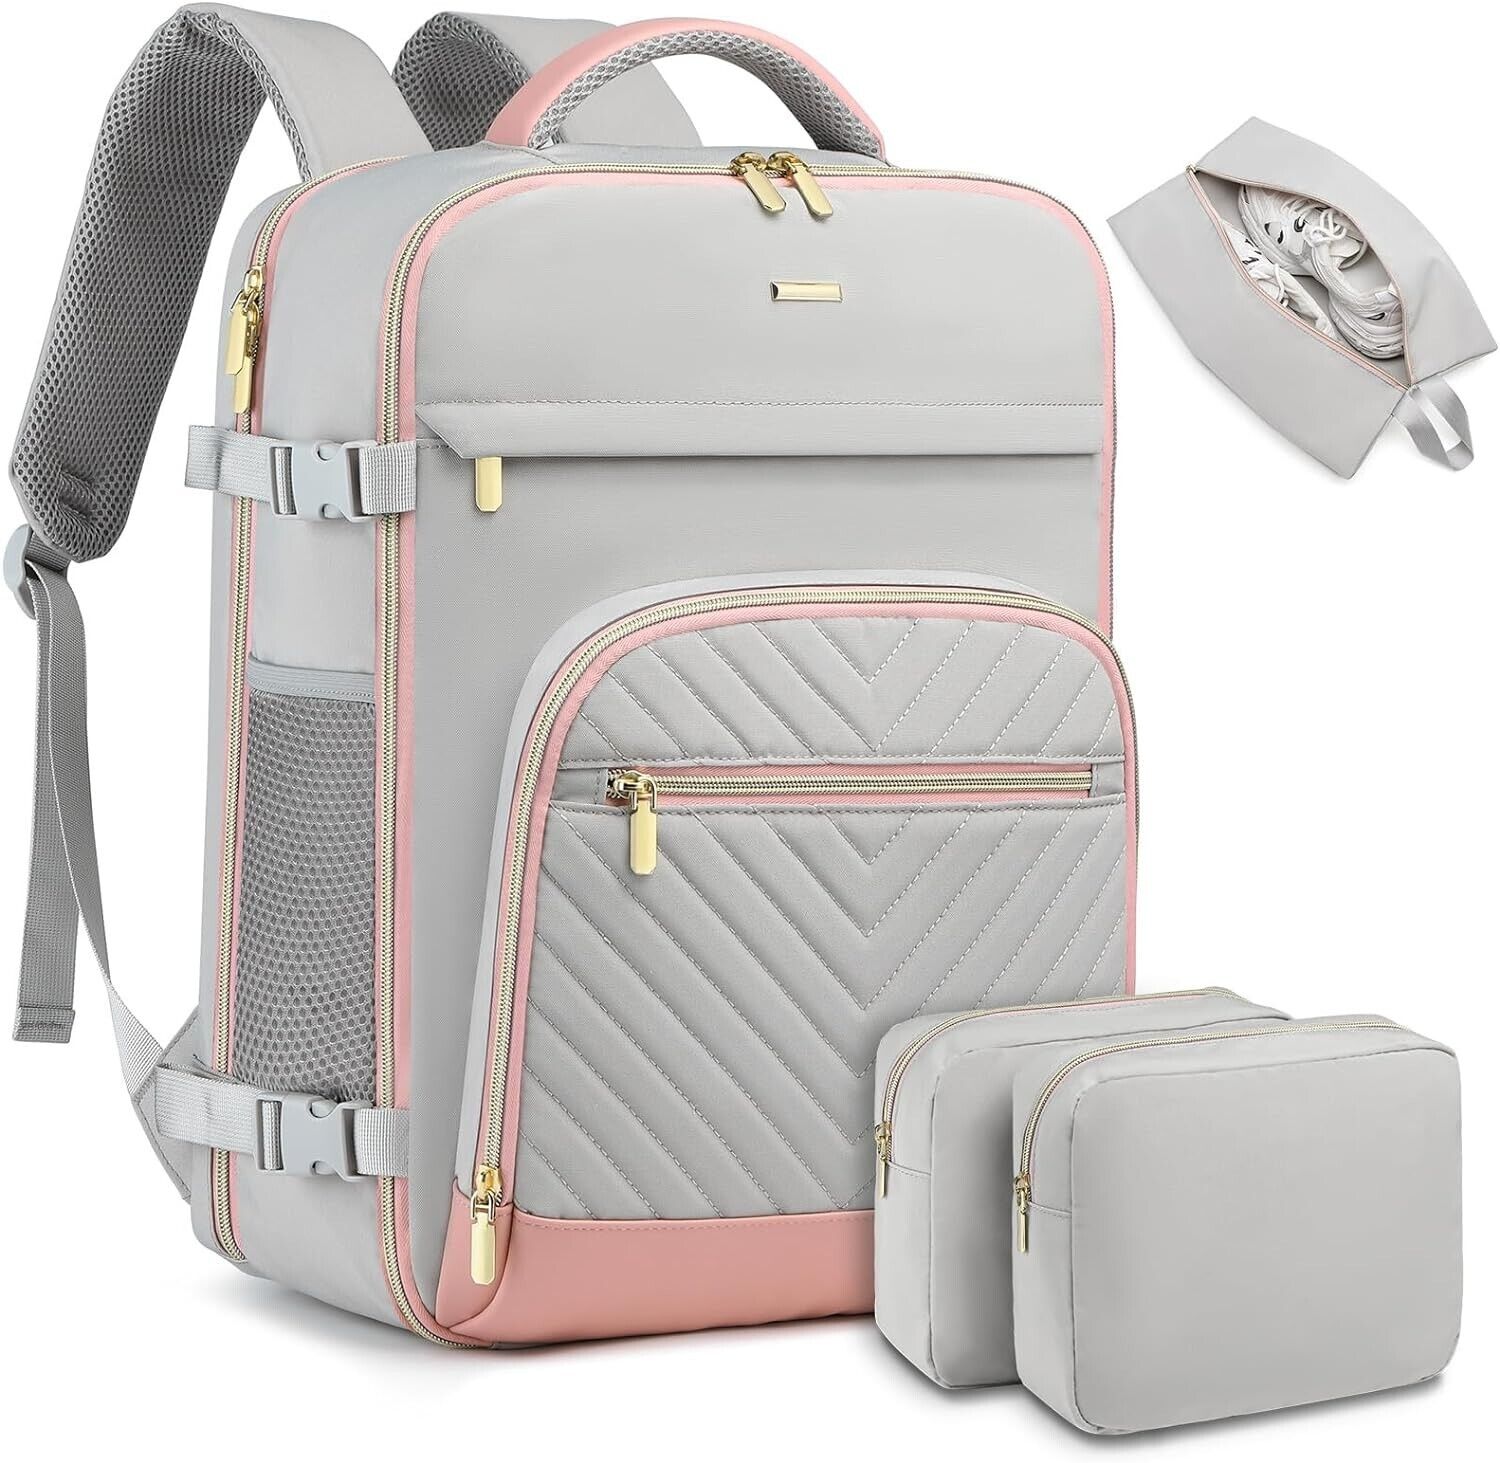 Travel Laptop Backpack for Women: 17 Inch 40L Carry on Business Laptop Bag TSA F